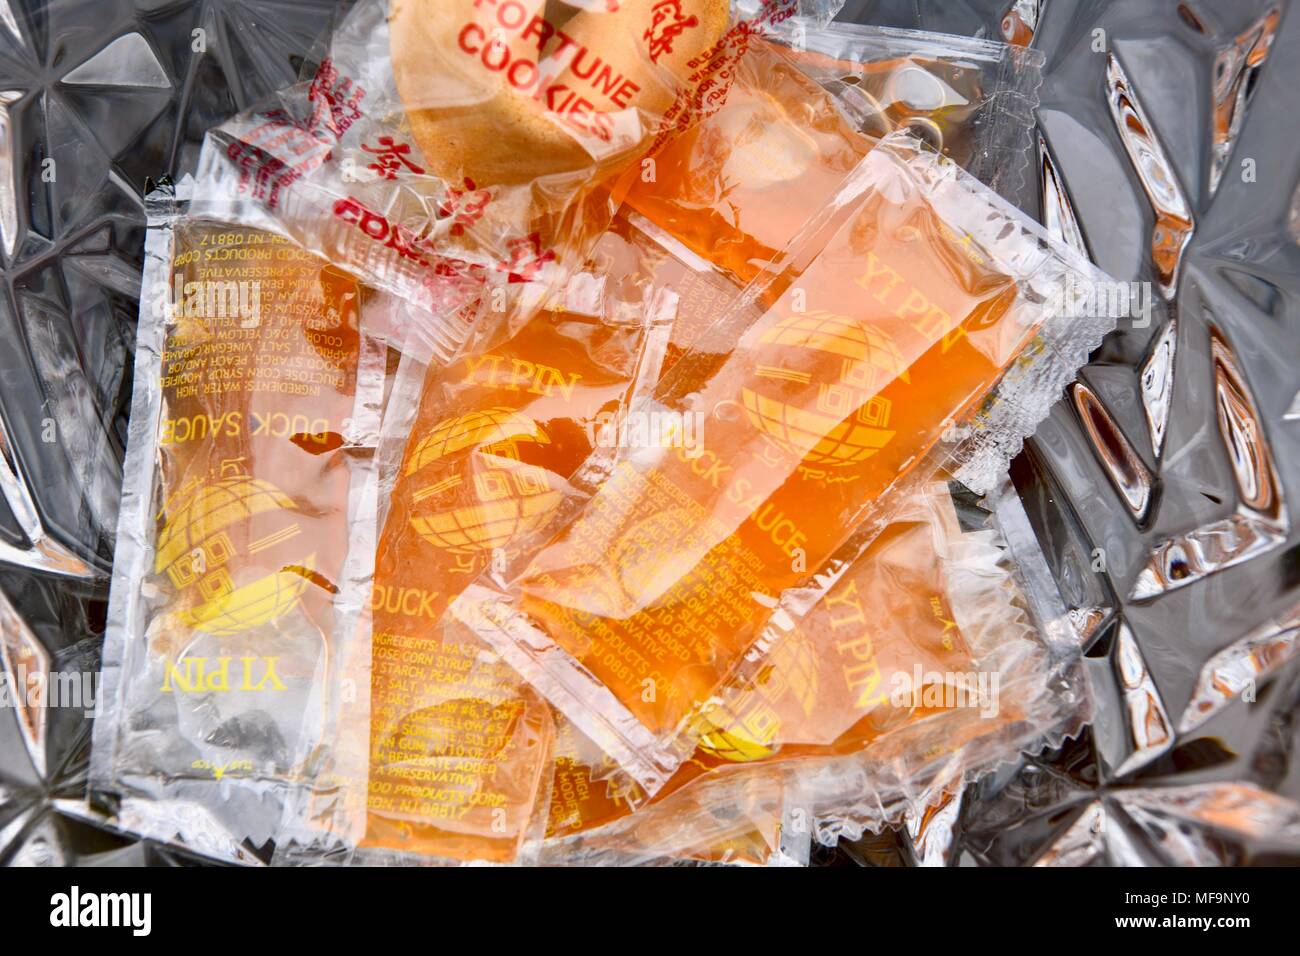 Yi Pin duck sauce packets Stock Photo   Alamy